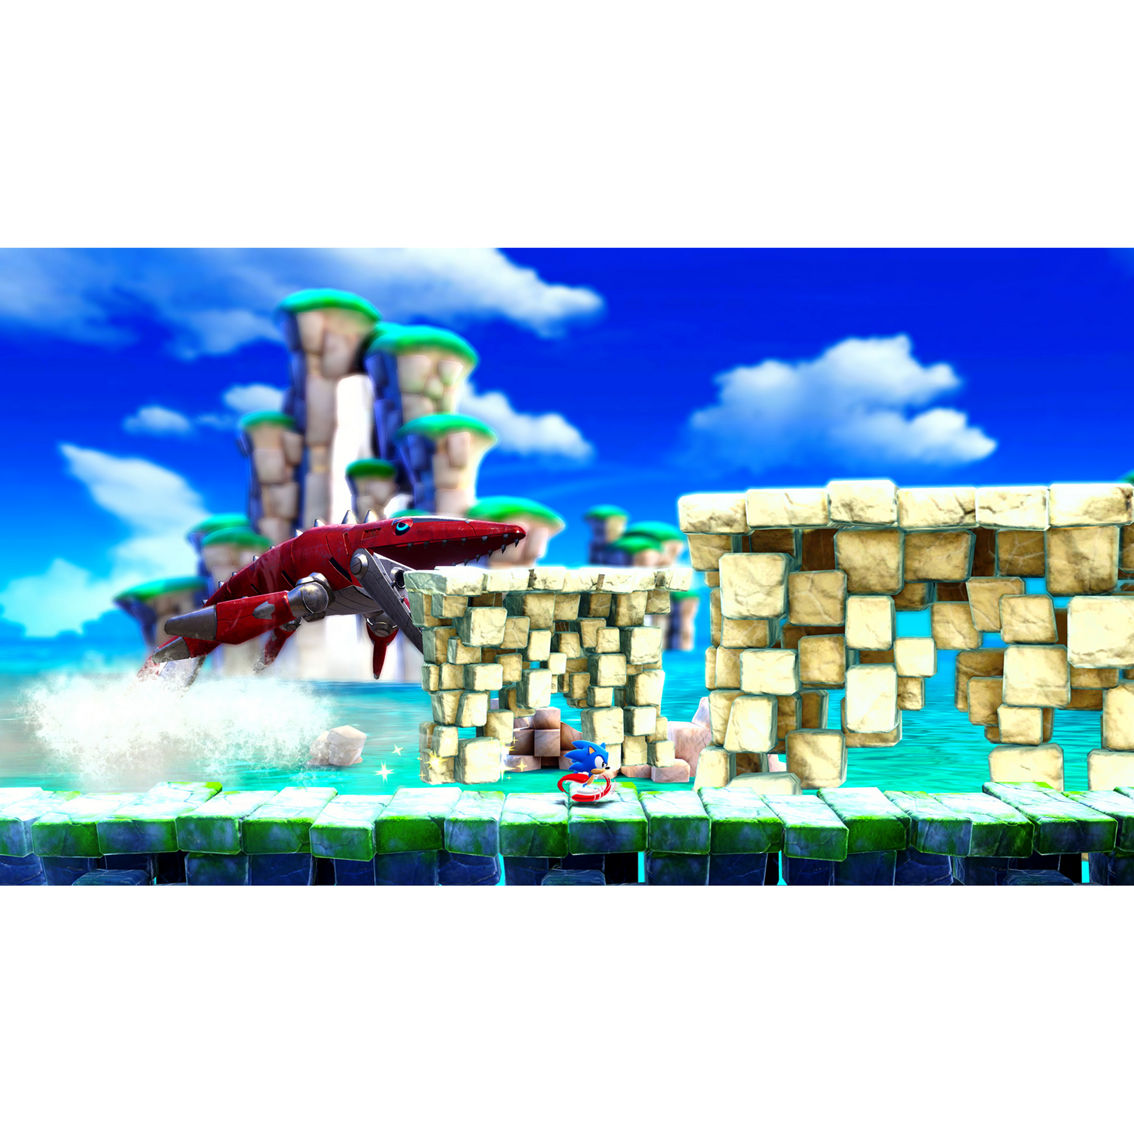 Sonic Superstars (Nintendo Switch) - Image 4 of 6